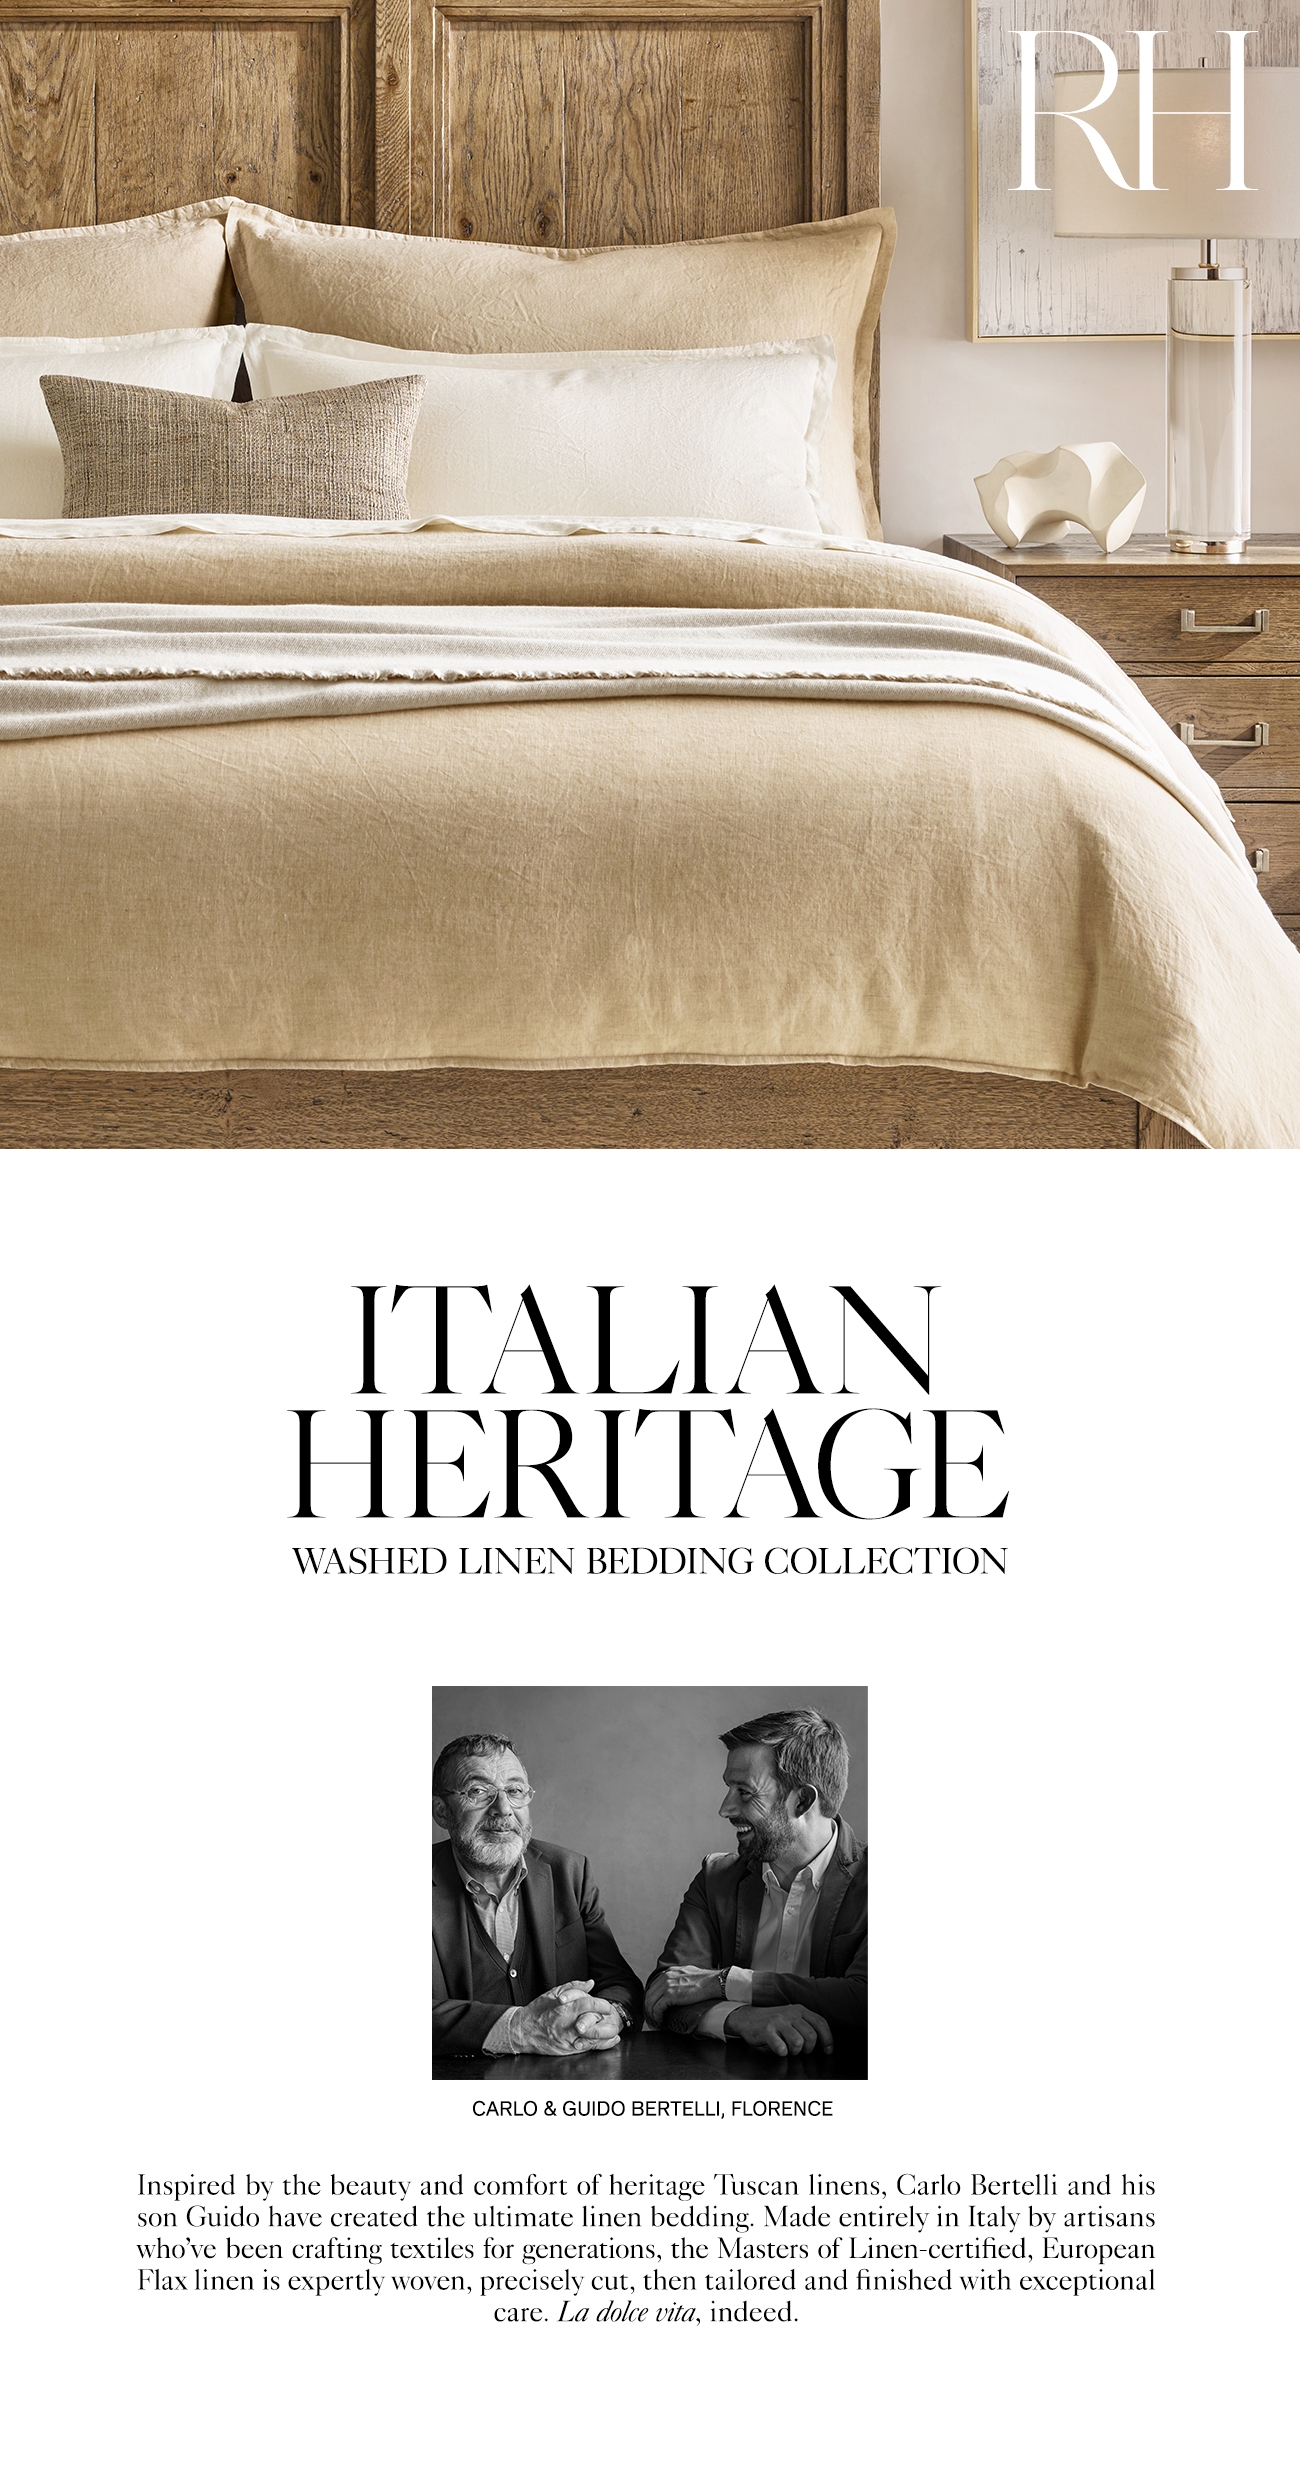 La Dolce Vita. Italian Heritage Washed Linen Bedding by Carlo